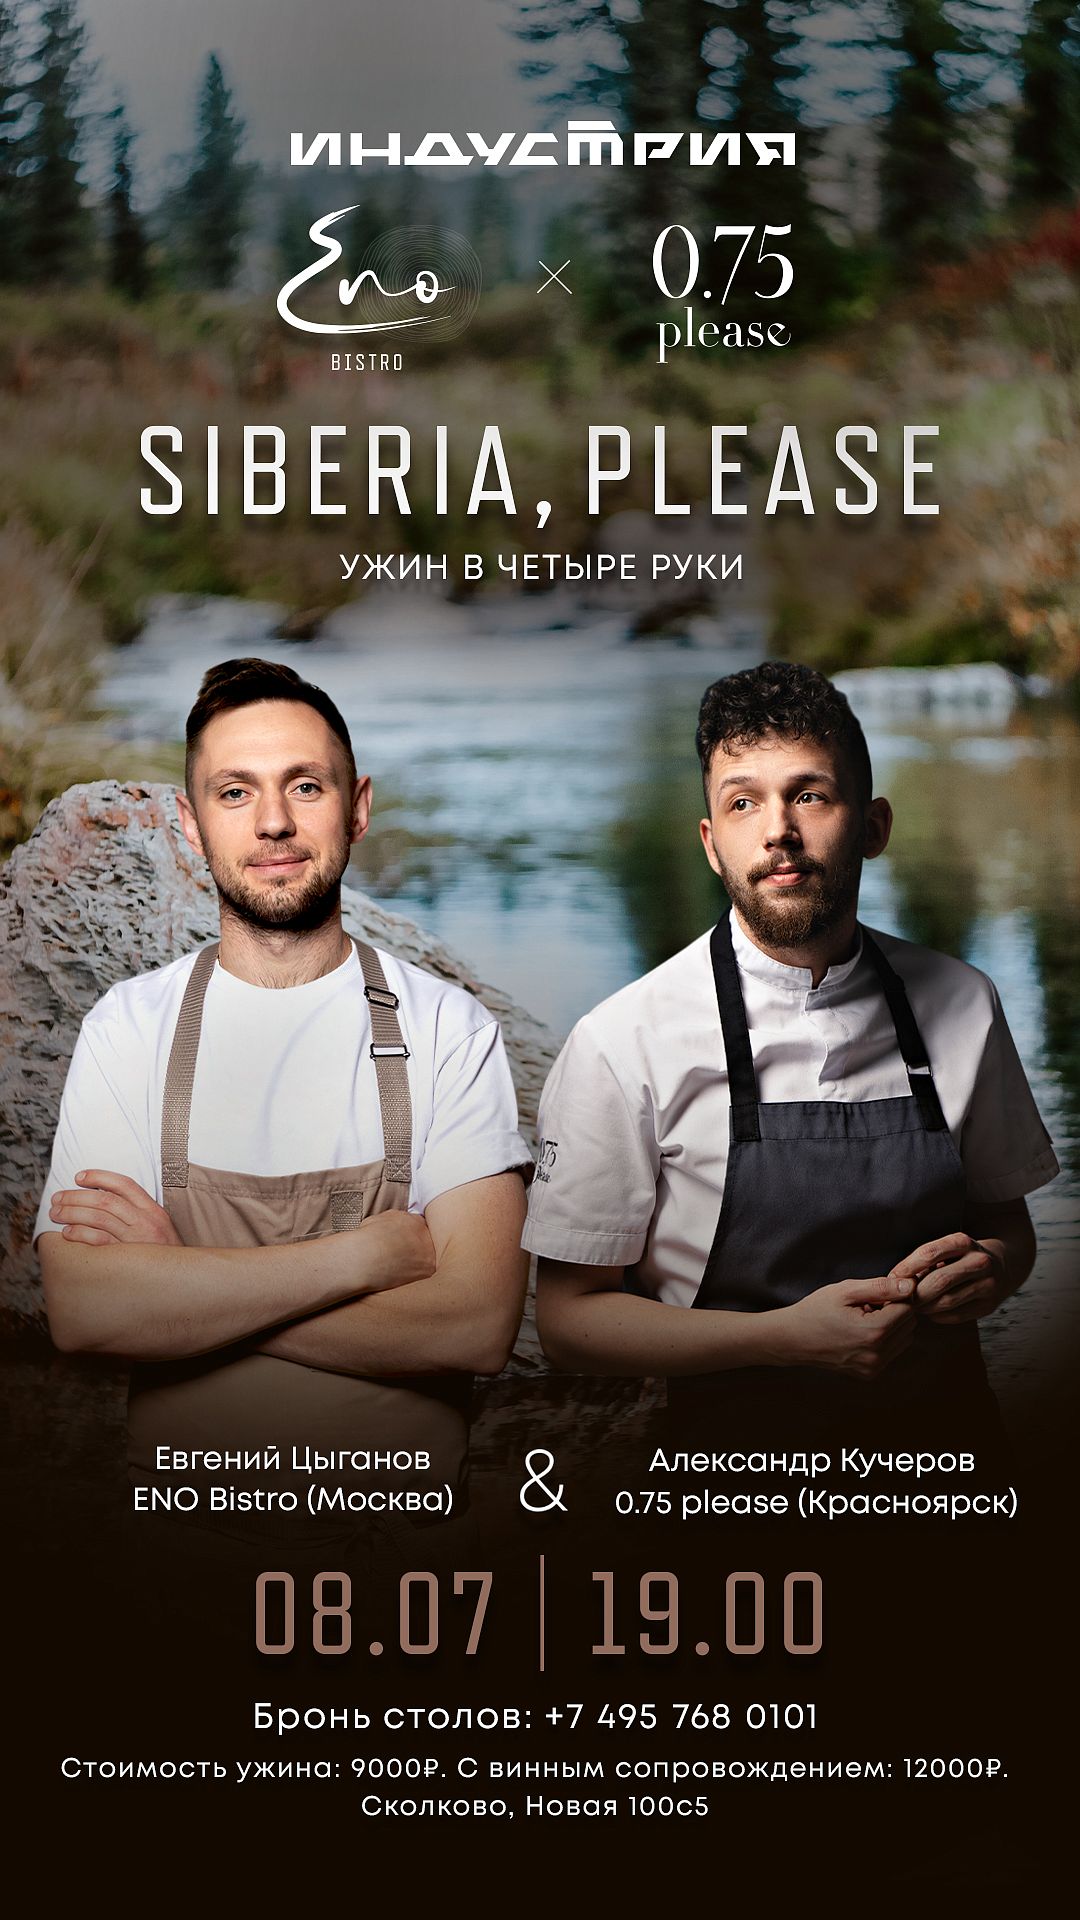 Siberia, please — ужин в ресторане ENO Bistro - фотография № 1